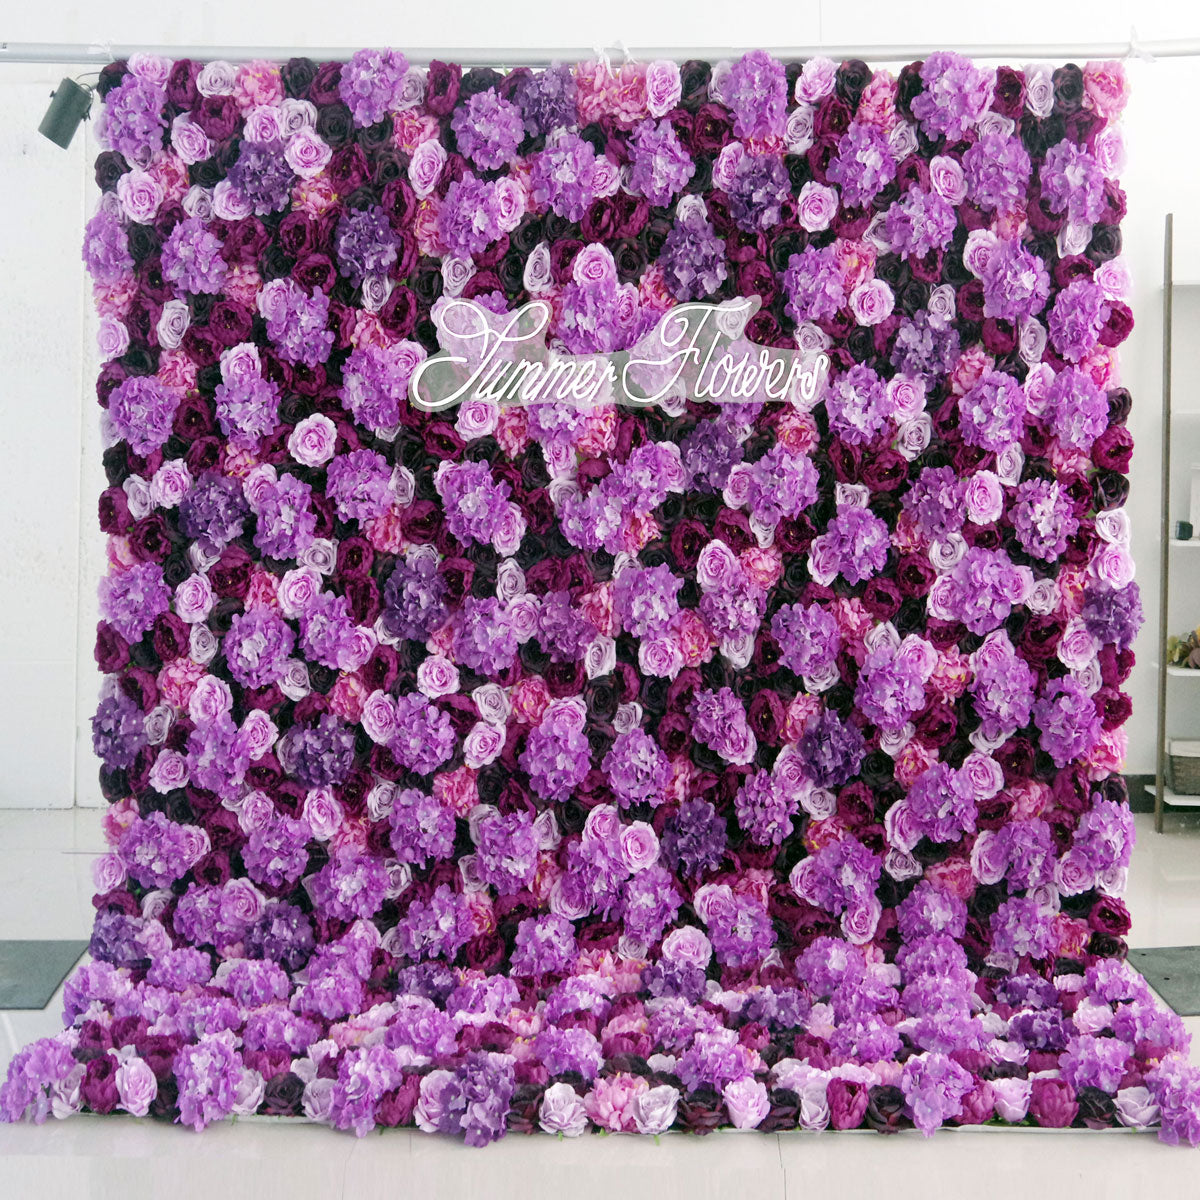 Summer Flower:CB-057 8ft*8ft Cloth Back Artificial Flower Wall Backdrop